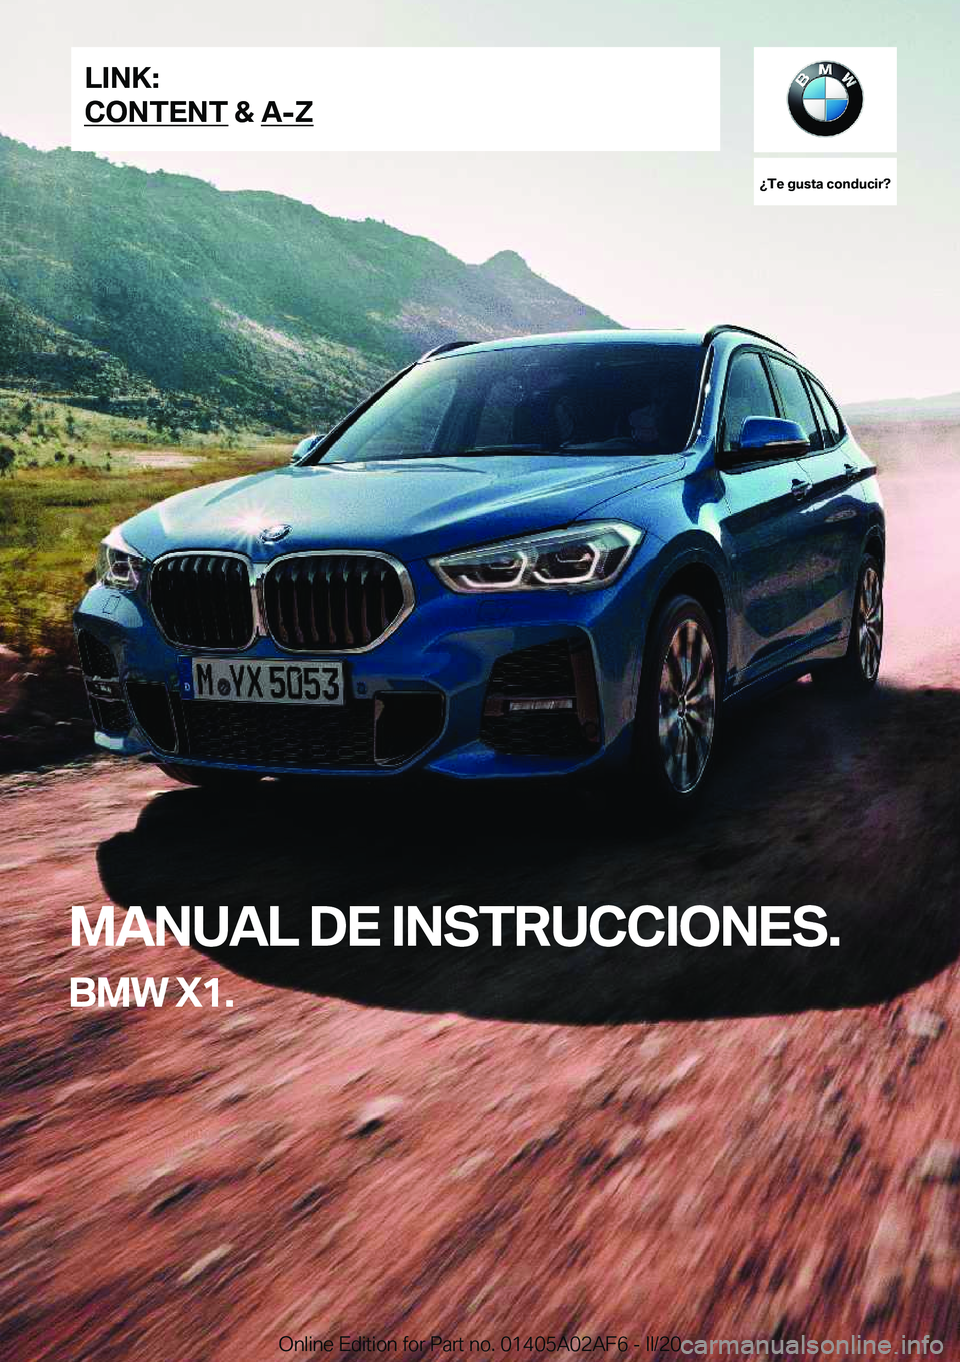 BMW X1 2020  Manuales de Empleo (in Spanish) ��T�e��g�u�s�t�a��c�o�n�d�u�c�i�r� 
�M�A�N�U�A�L��D�E��I�N�S�T�R�U�C�C�I�O�N�E�S�.
�B�M�W��X�1�.�L�I�N�K�:
�C�O�N�T�E�N�T��&��A�-�Z�O�n�l�i�n�e��E�d�i�t�i�o�n��f�o�r��P�a�r�t��n�o�.��0�1�